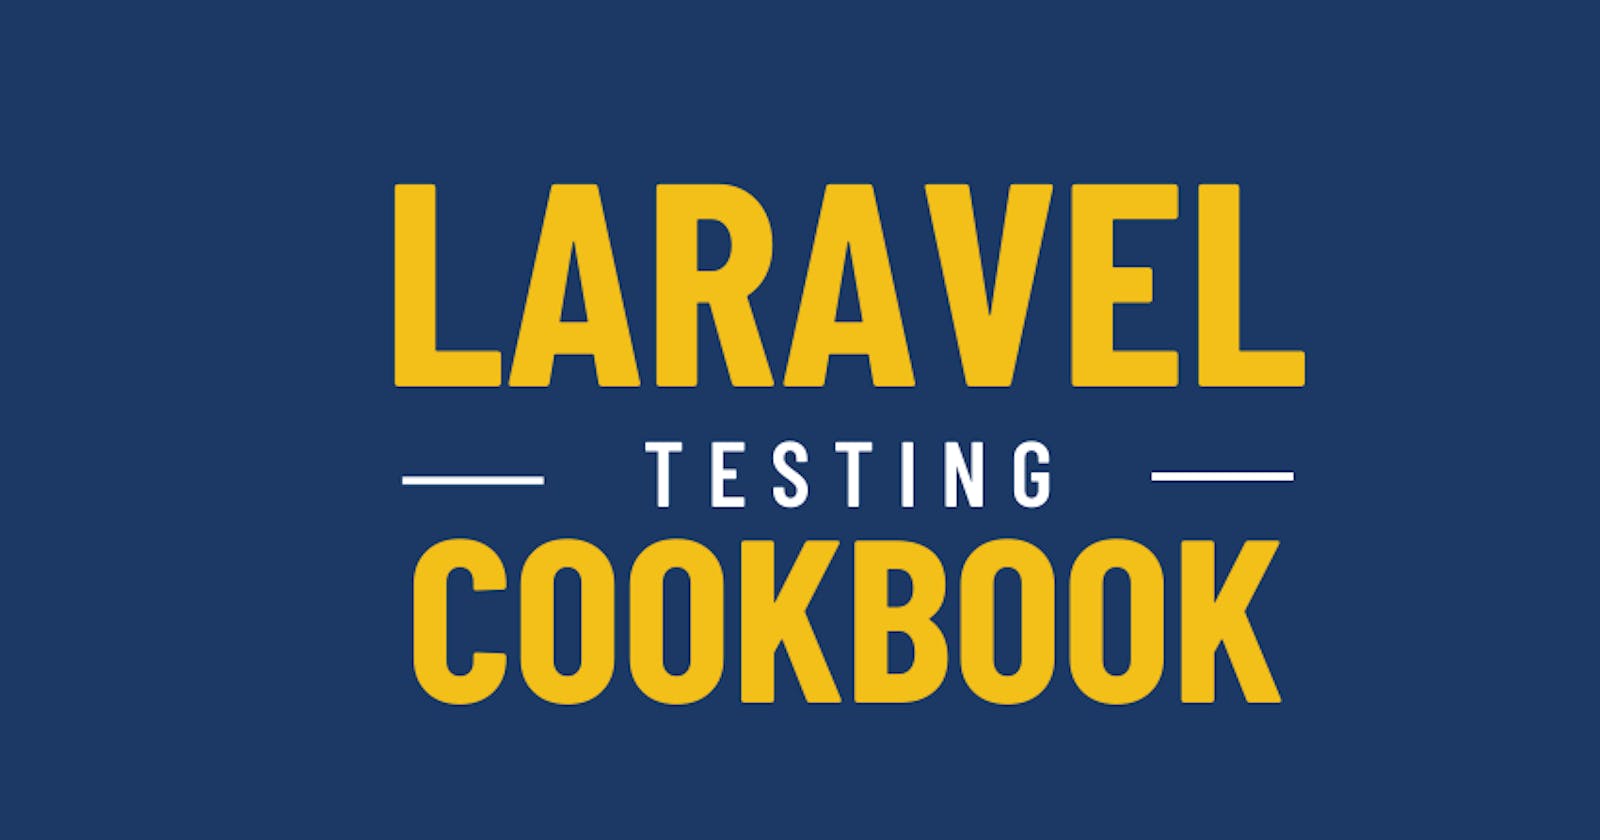 I'm writing a new Laravel book on testing called Laravel Testing Cookbook